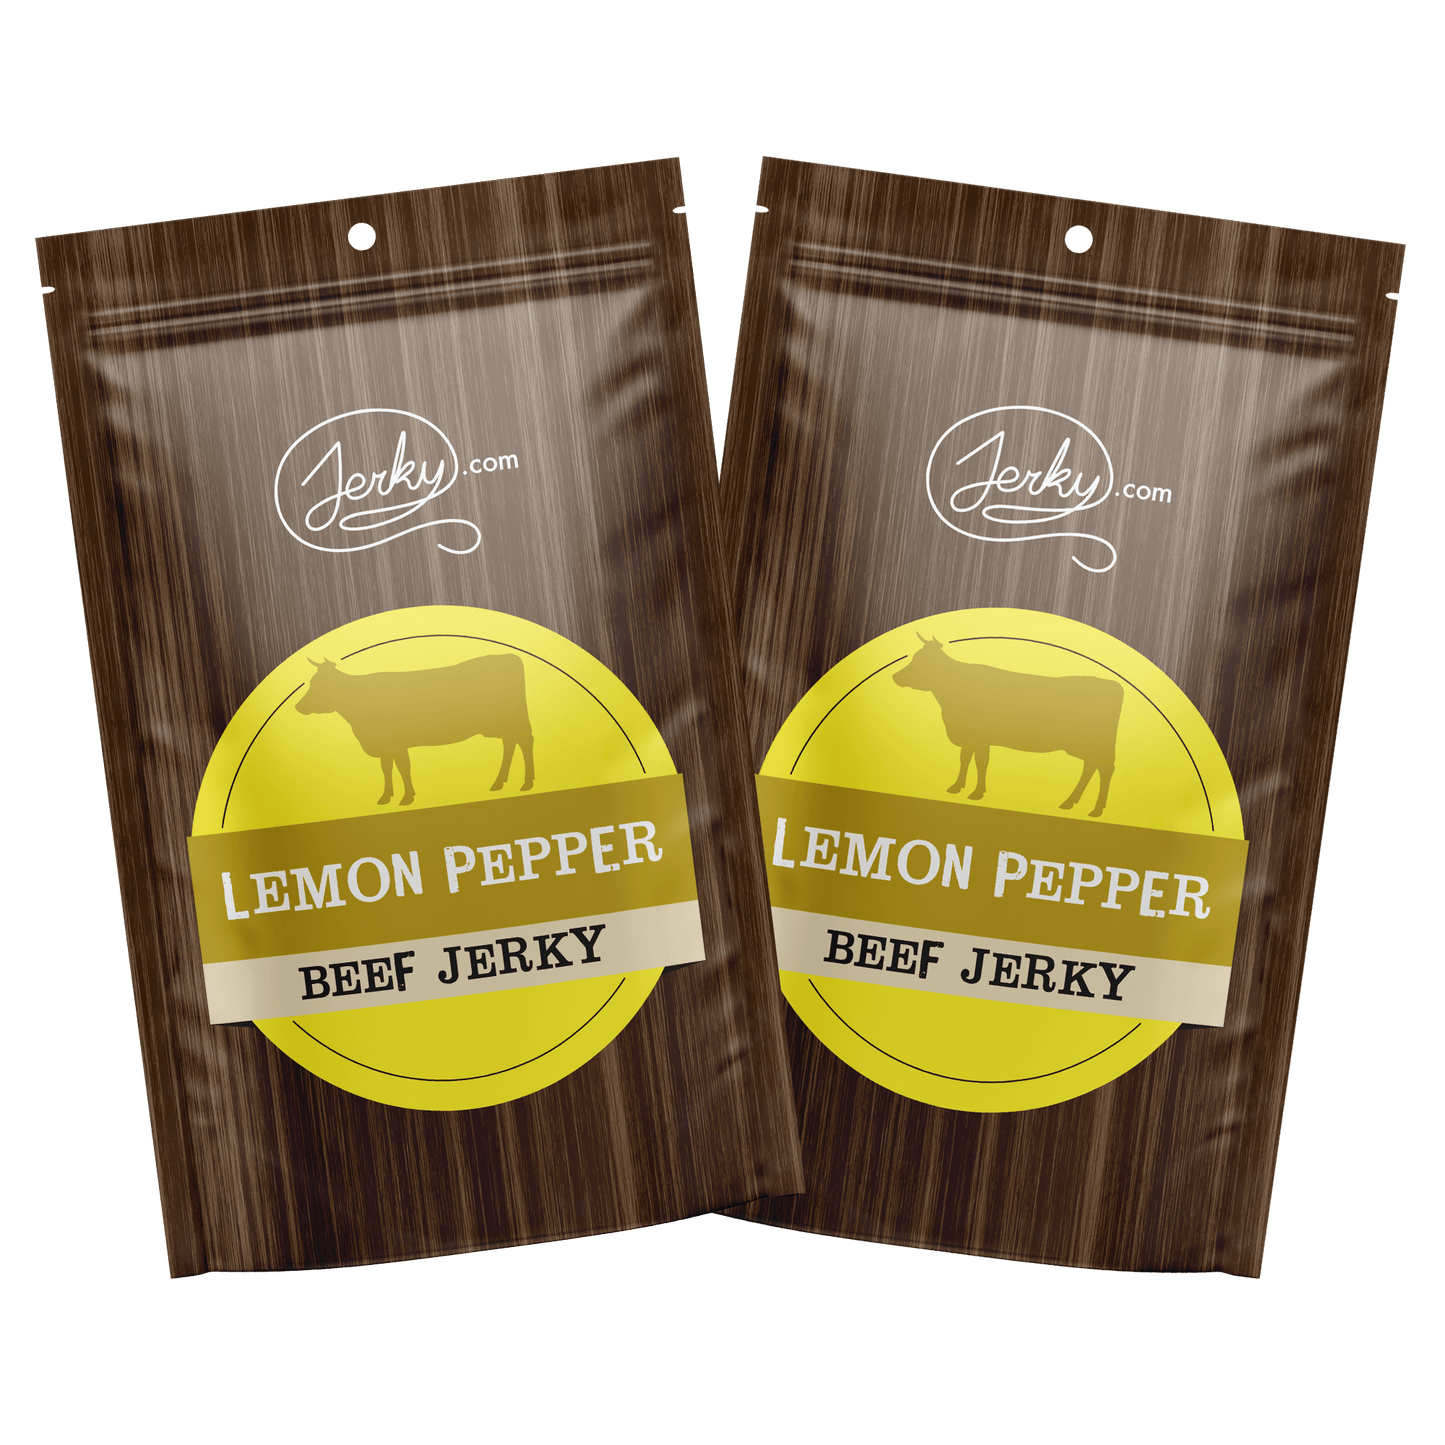 All-Natural Beef Jerky - Lemon Pepper by Jerky.com